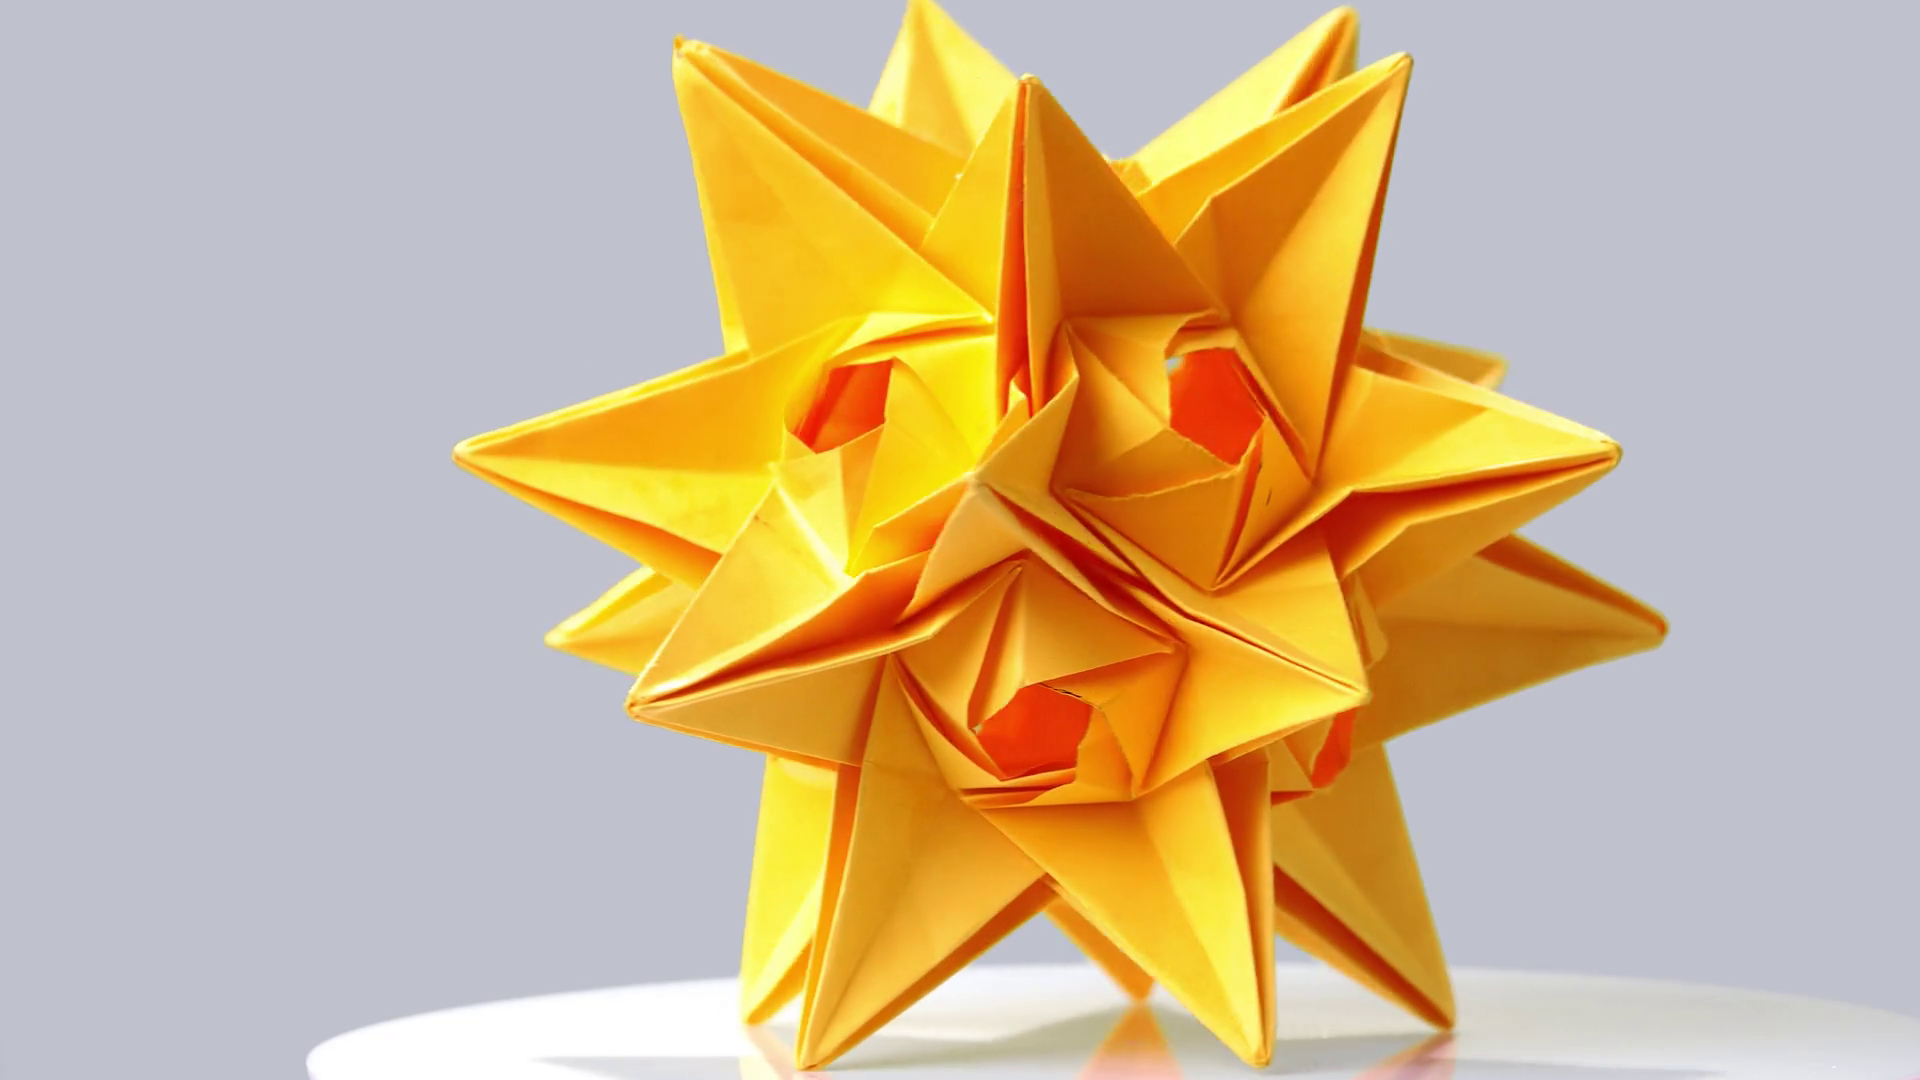 Origami Modular Star Yellow Origami Star On Gray Background Beautiful Result Of Art School Modular Technique Of Kusudama Art